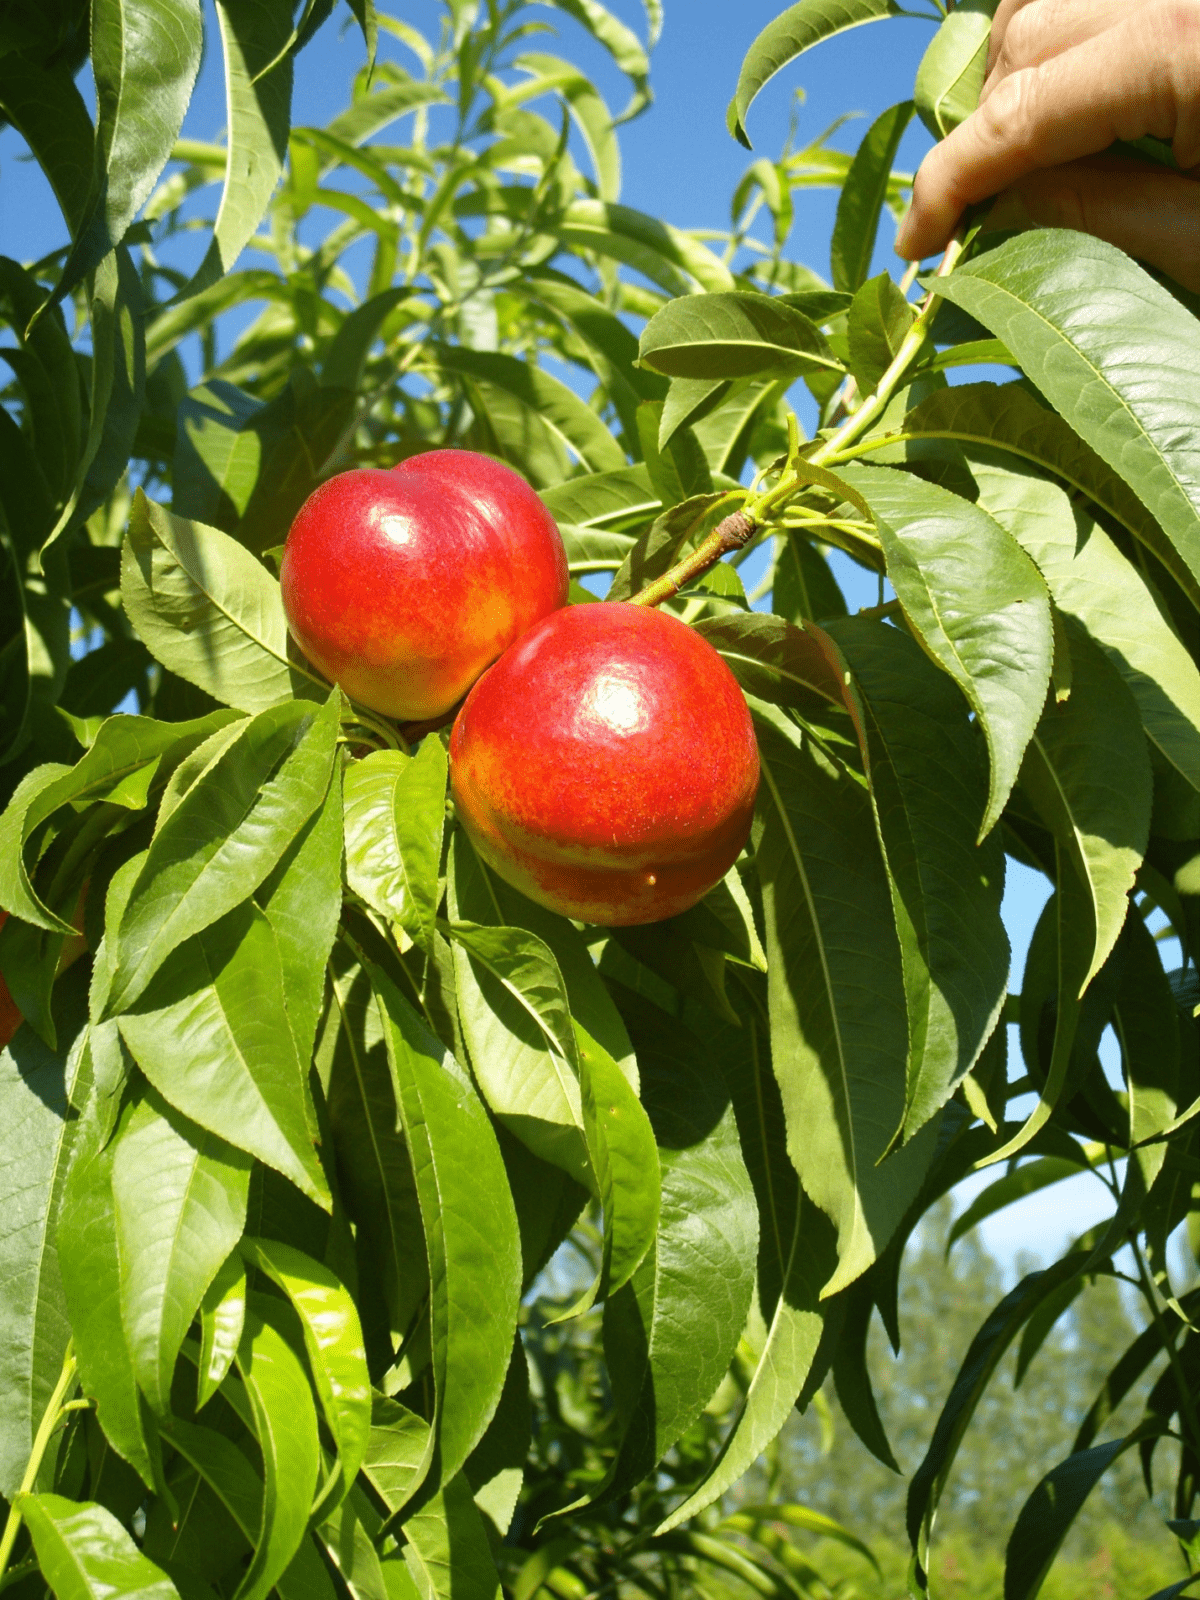 Pruning Nectarine Trees